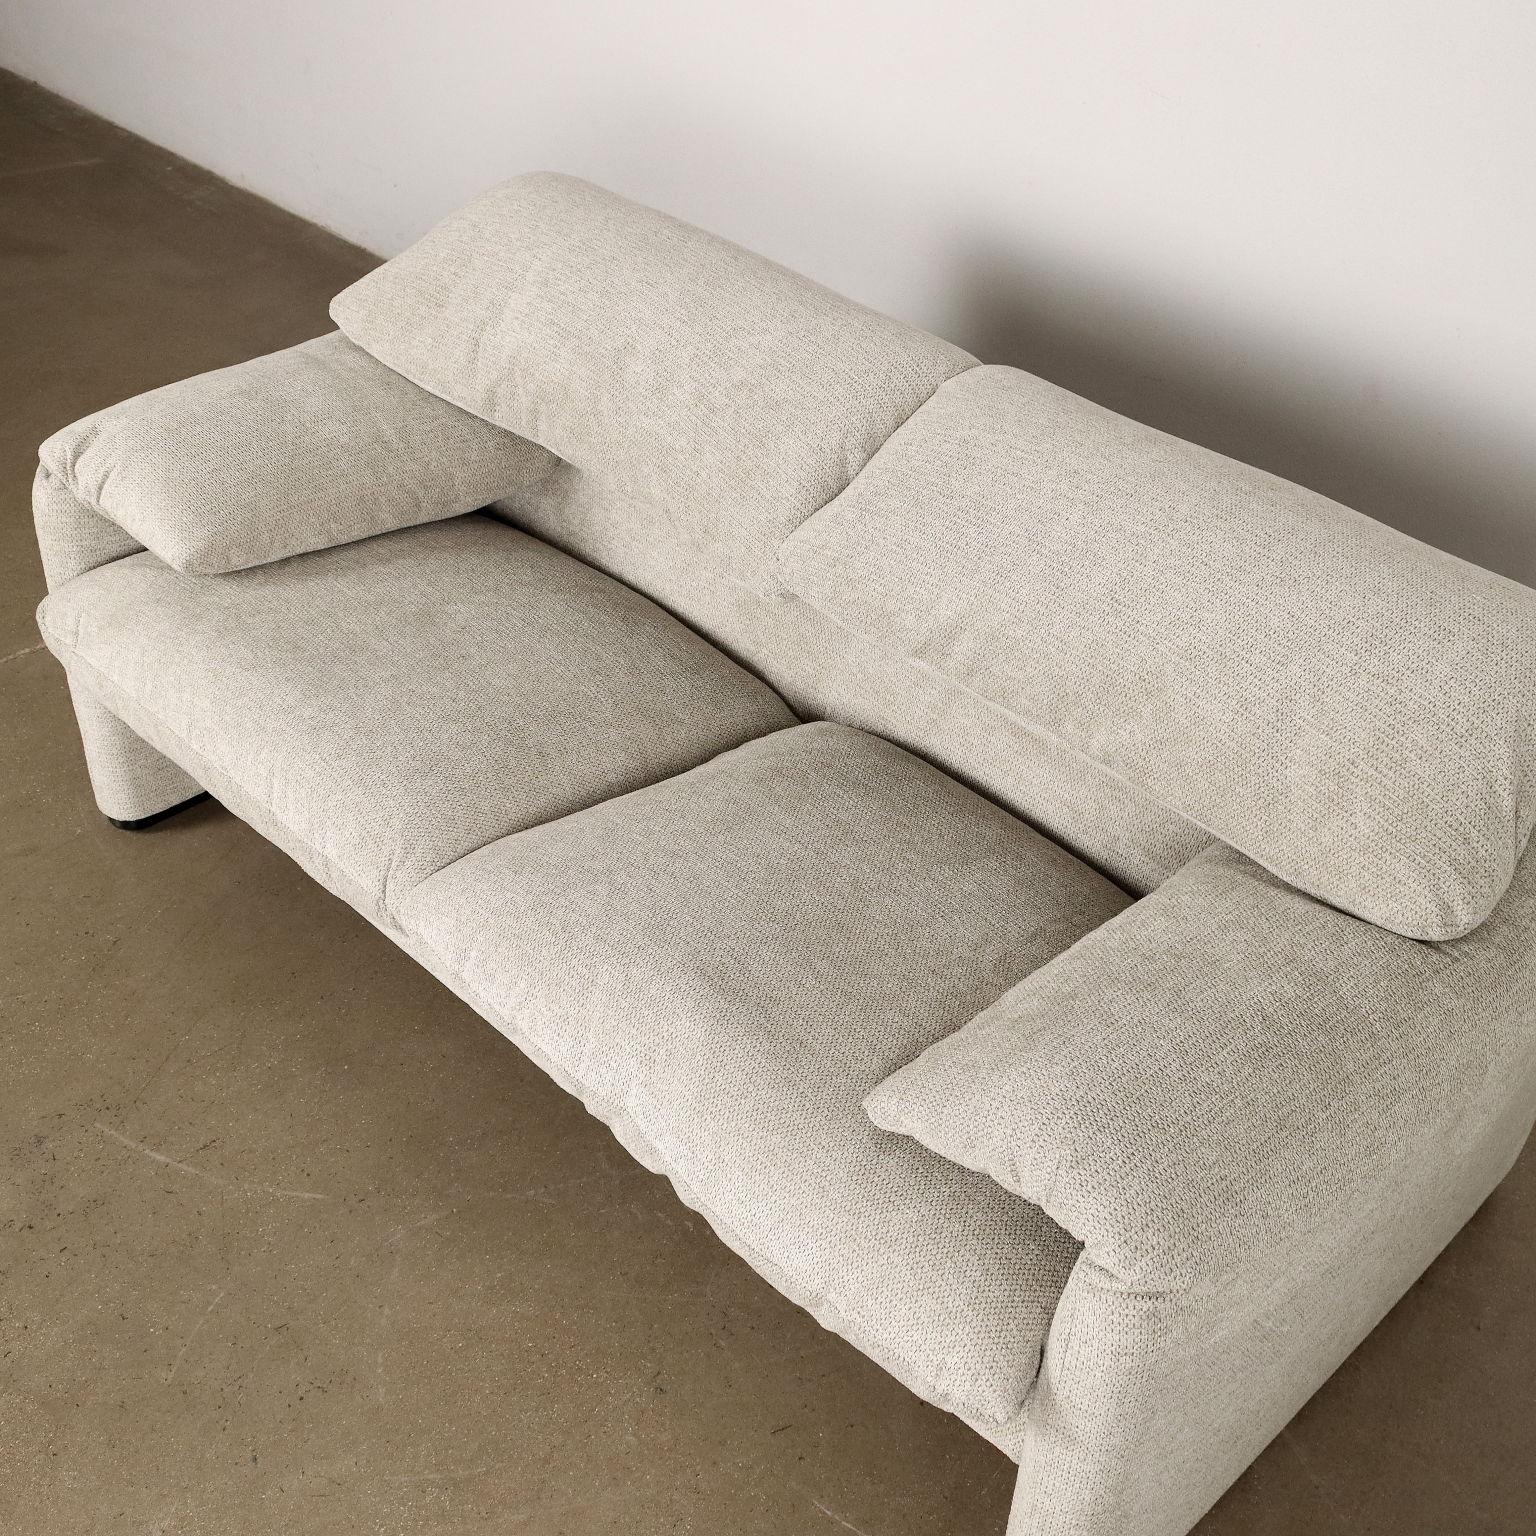 Late 20th Century Maralunga sofa by Vico Magistretti for Cassina Anni 80 For Sale